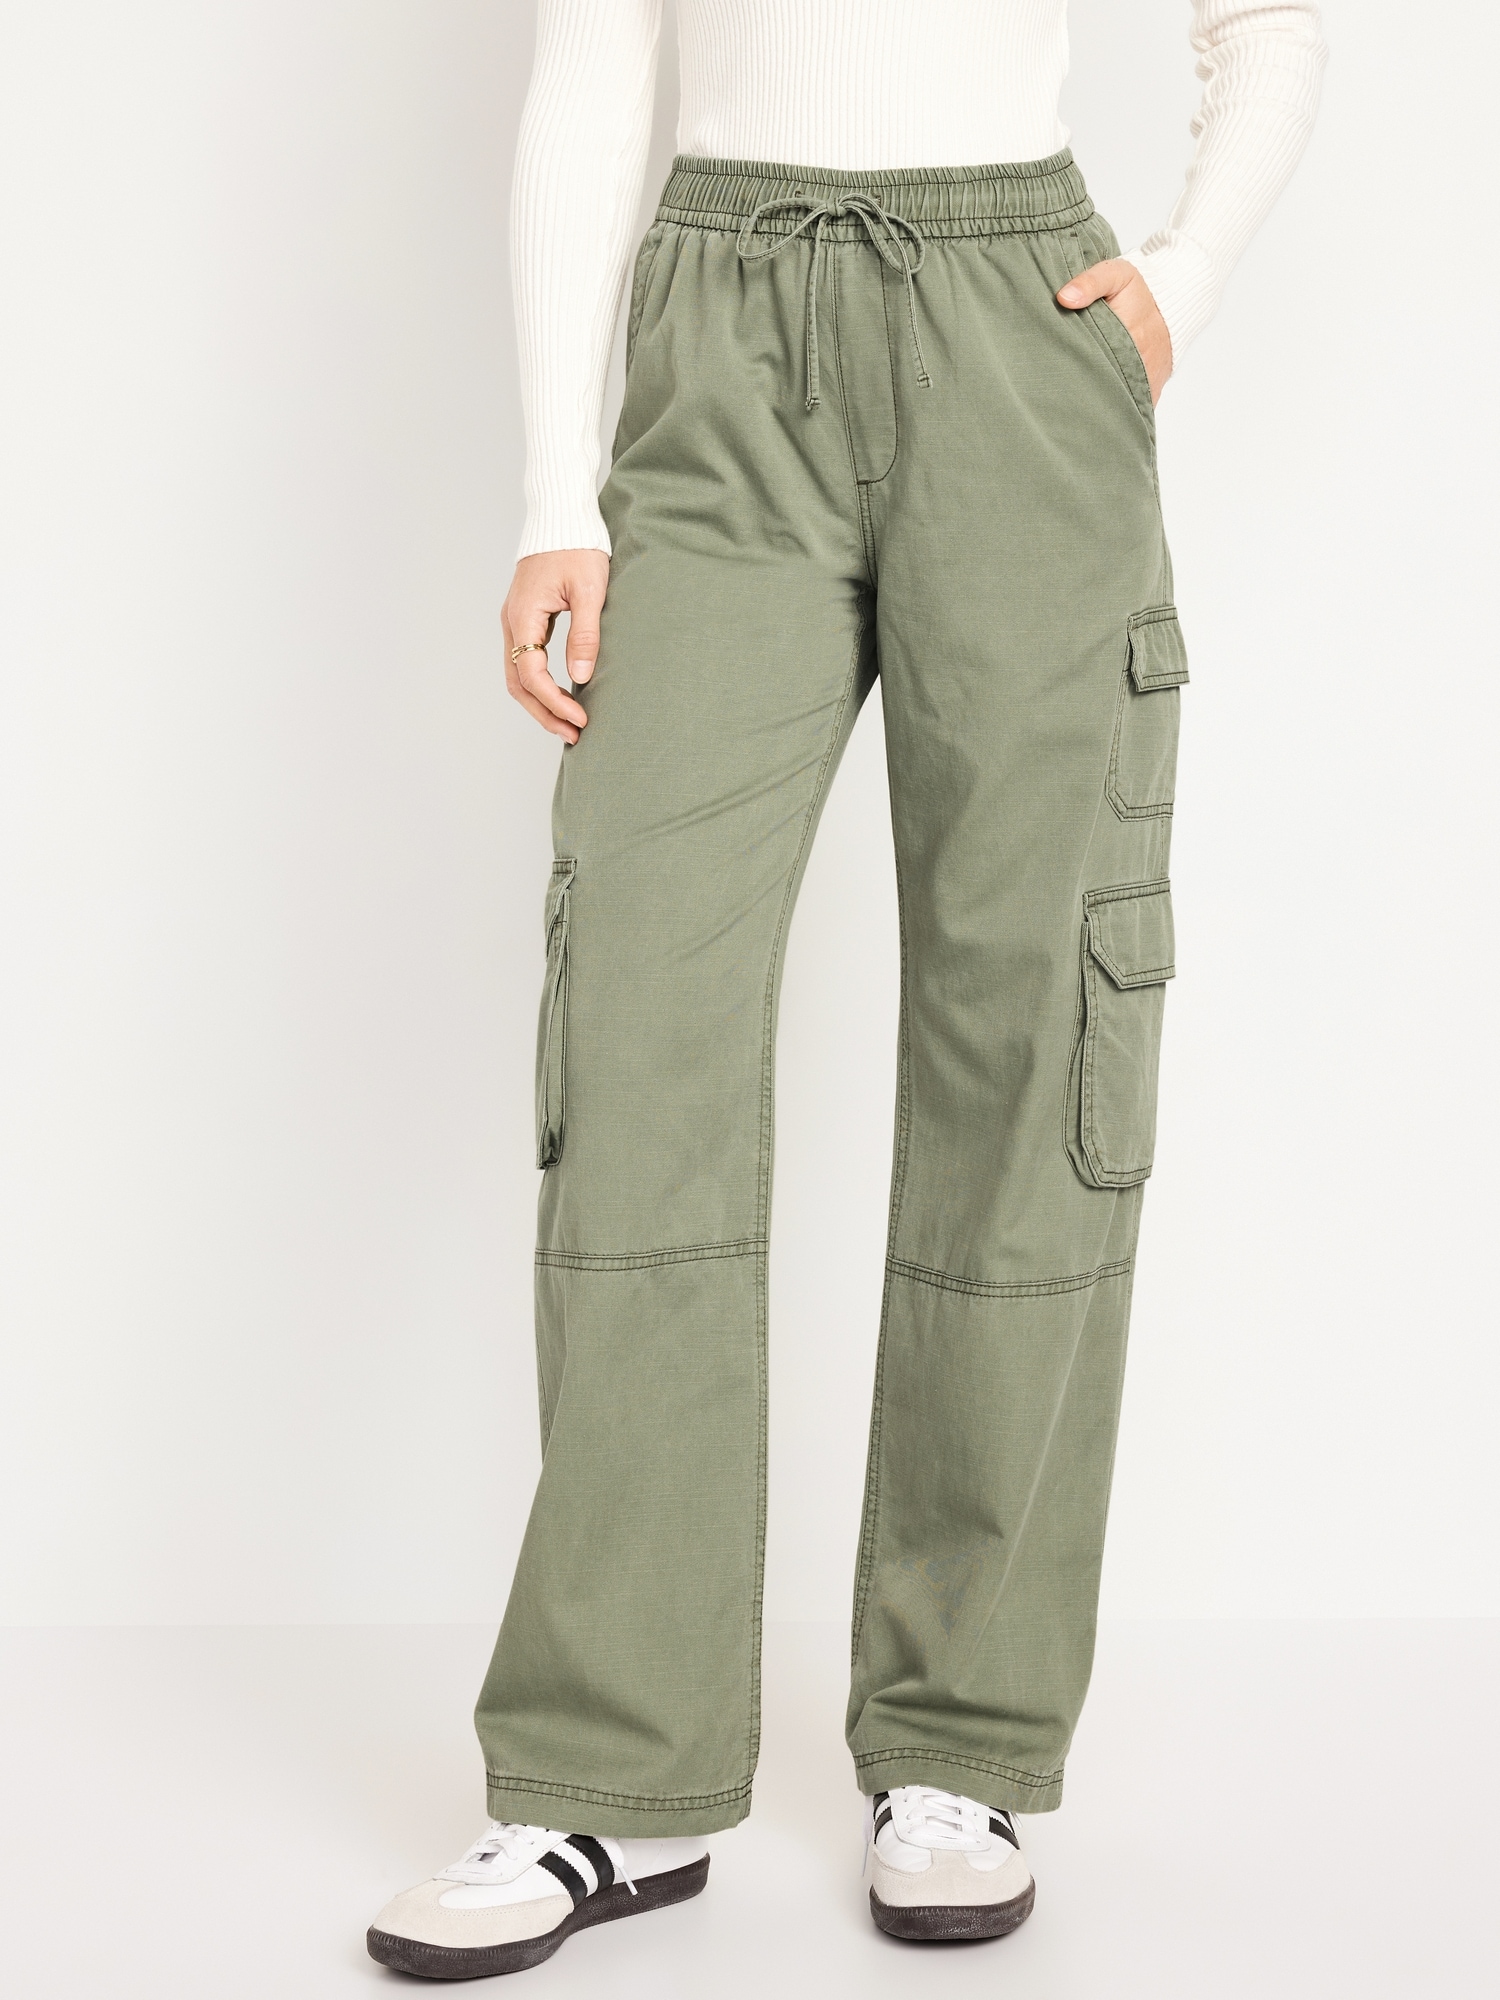 Women's Stretch Skinny Cargo Pants Casual High Waist Drawstring